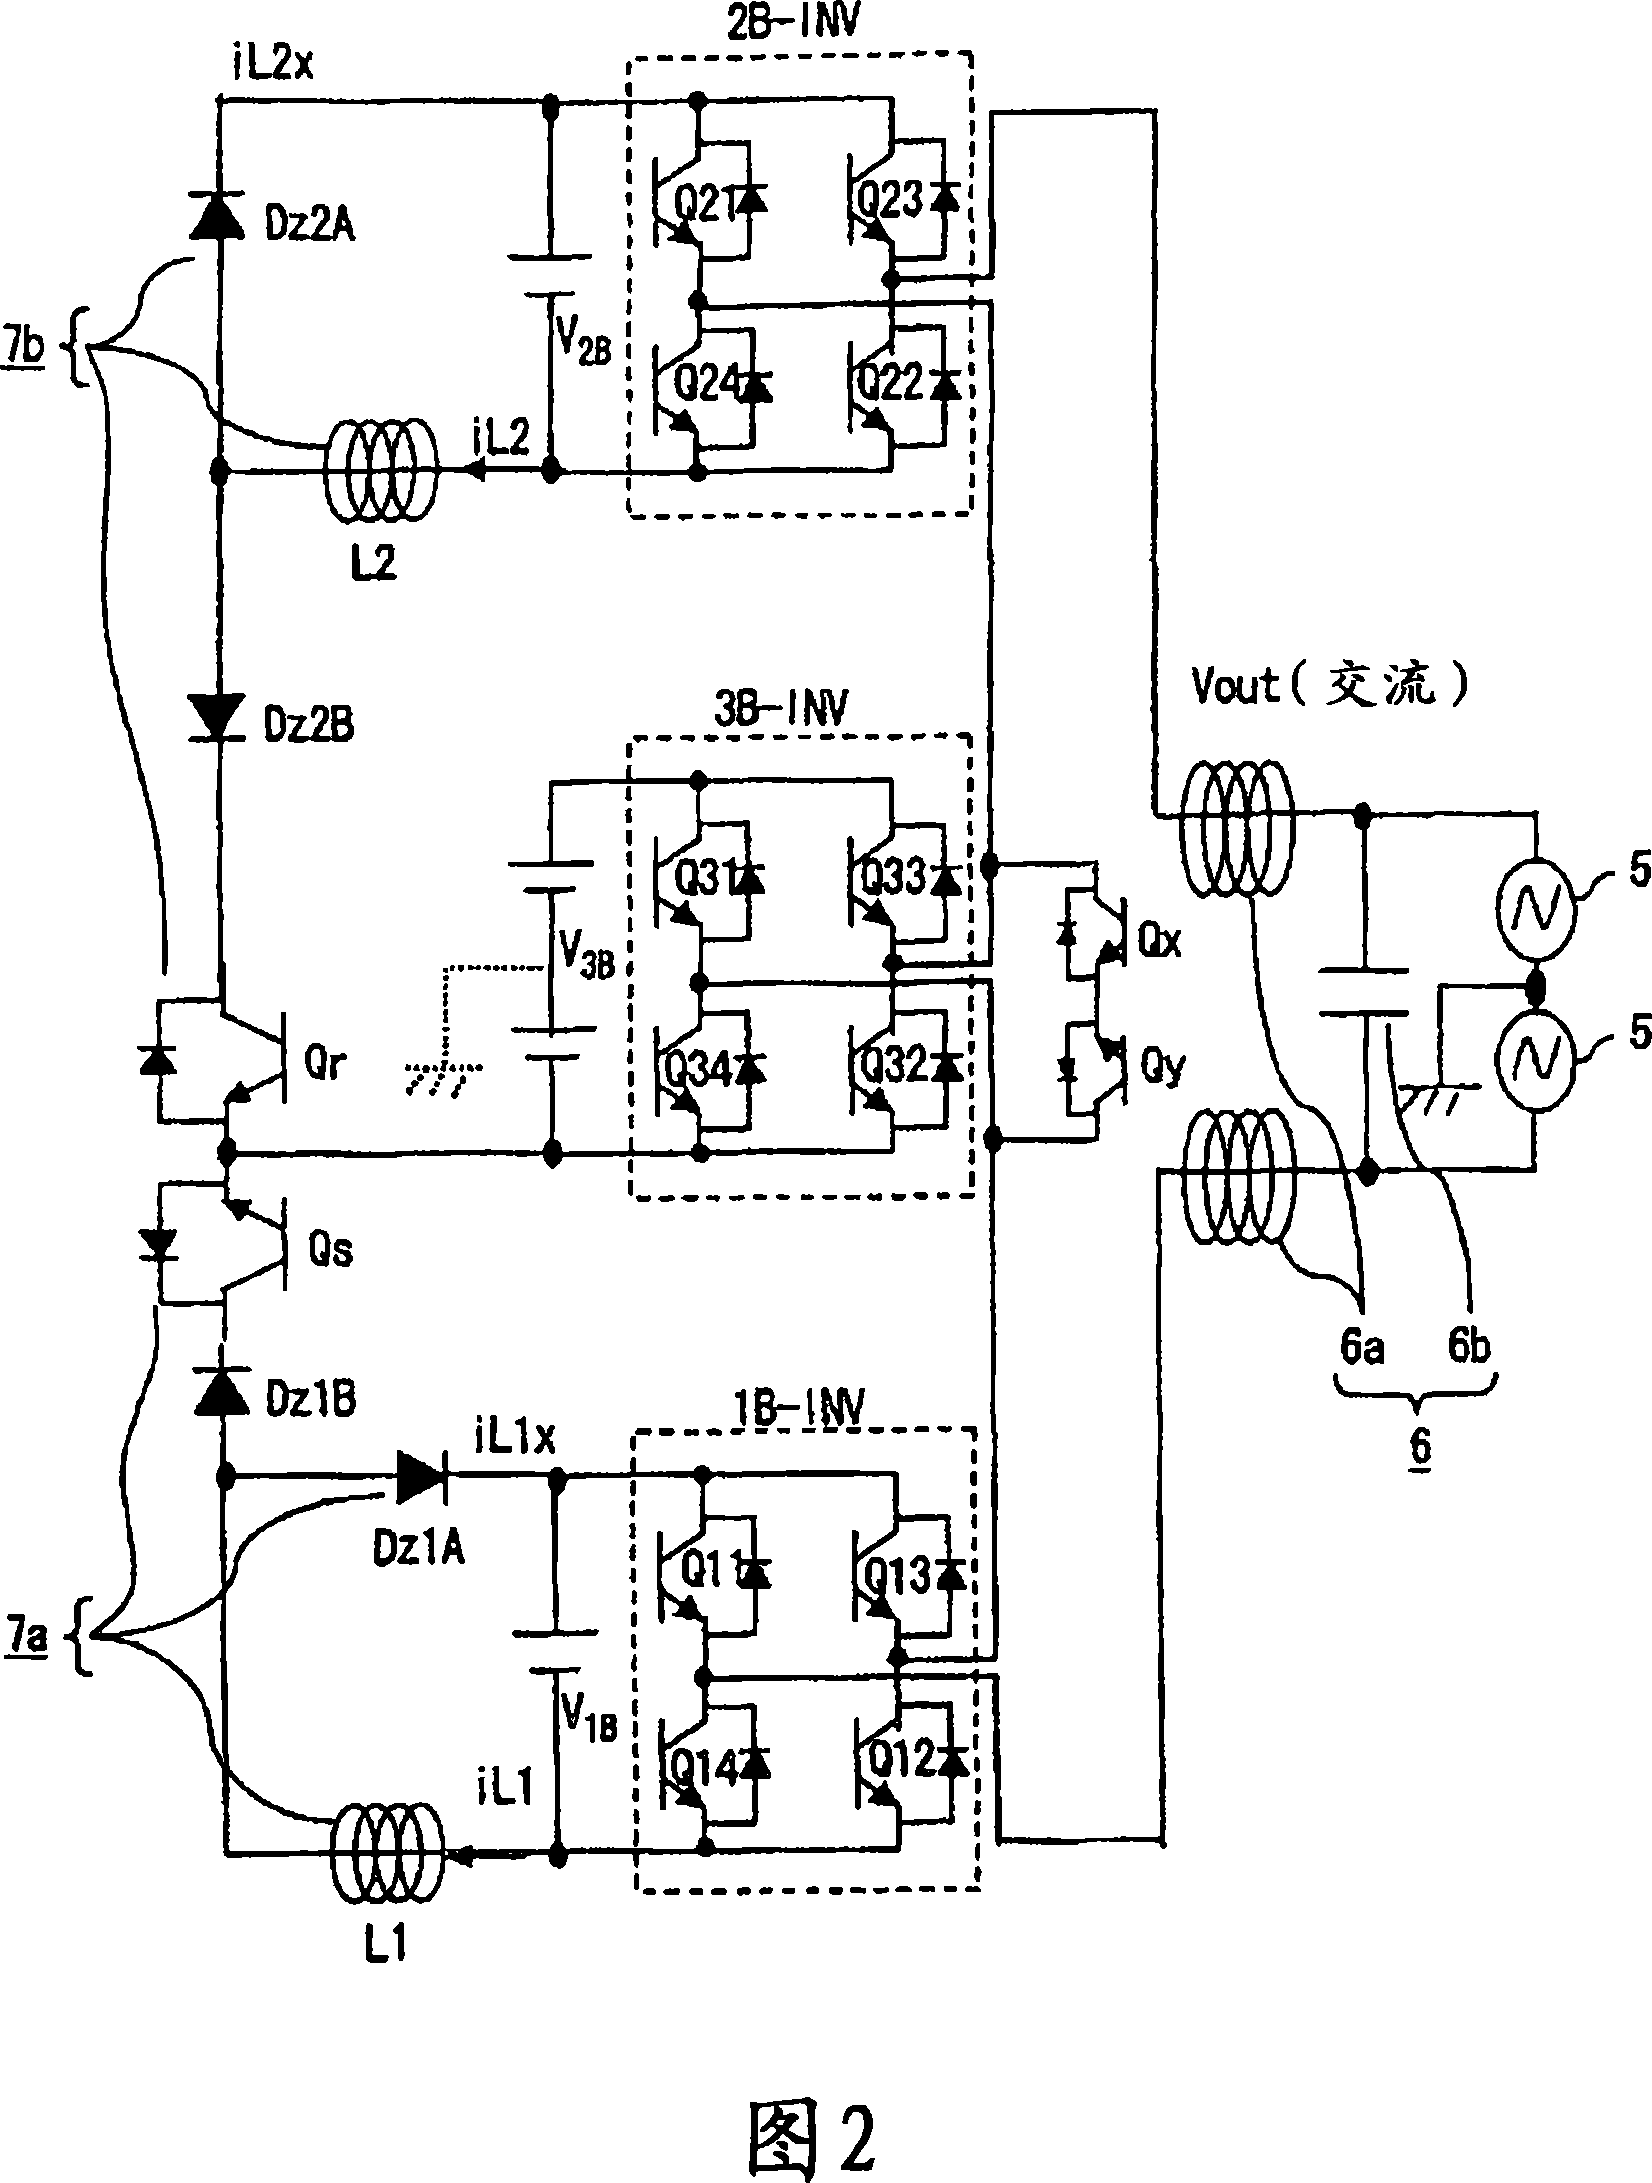 Power conversion apparatus